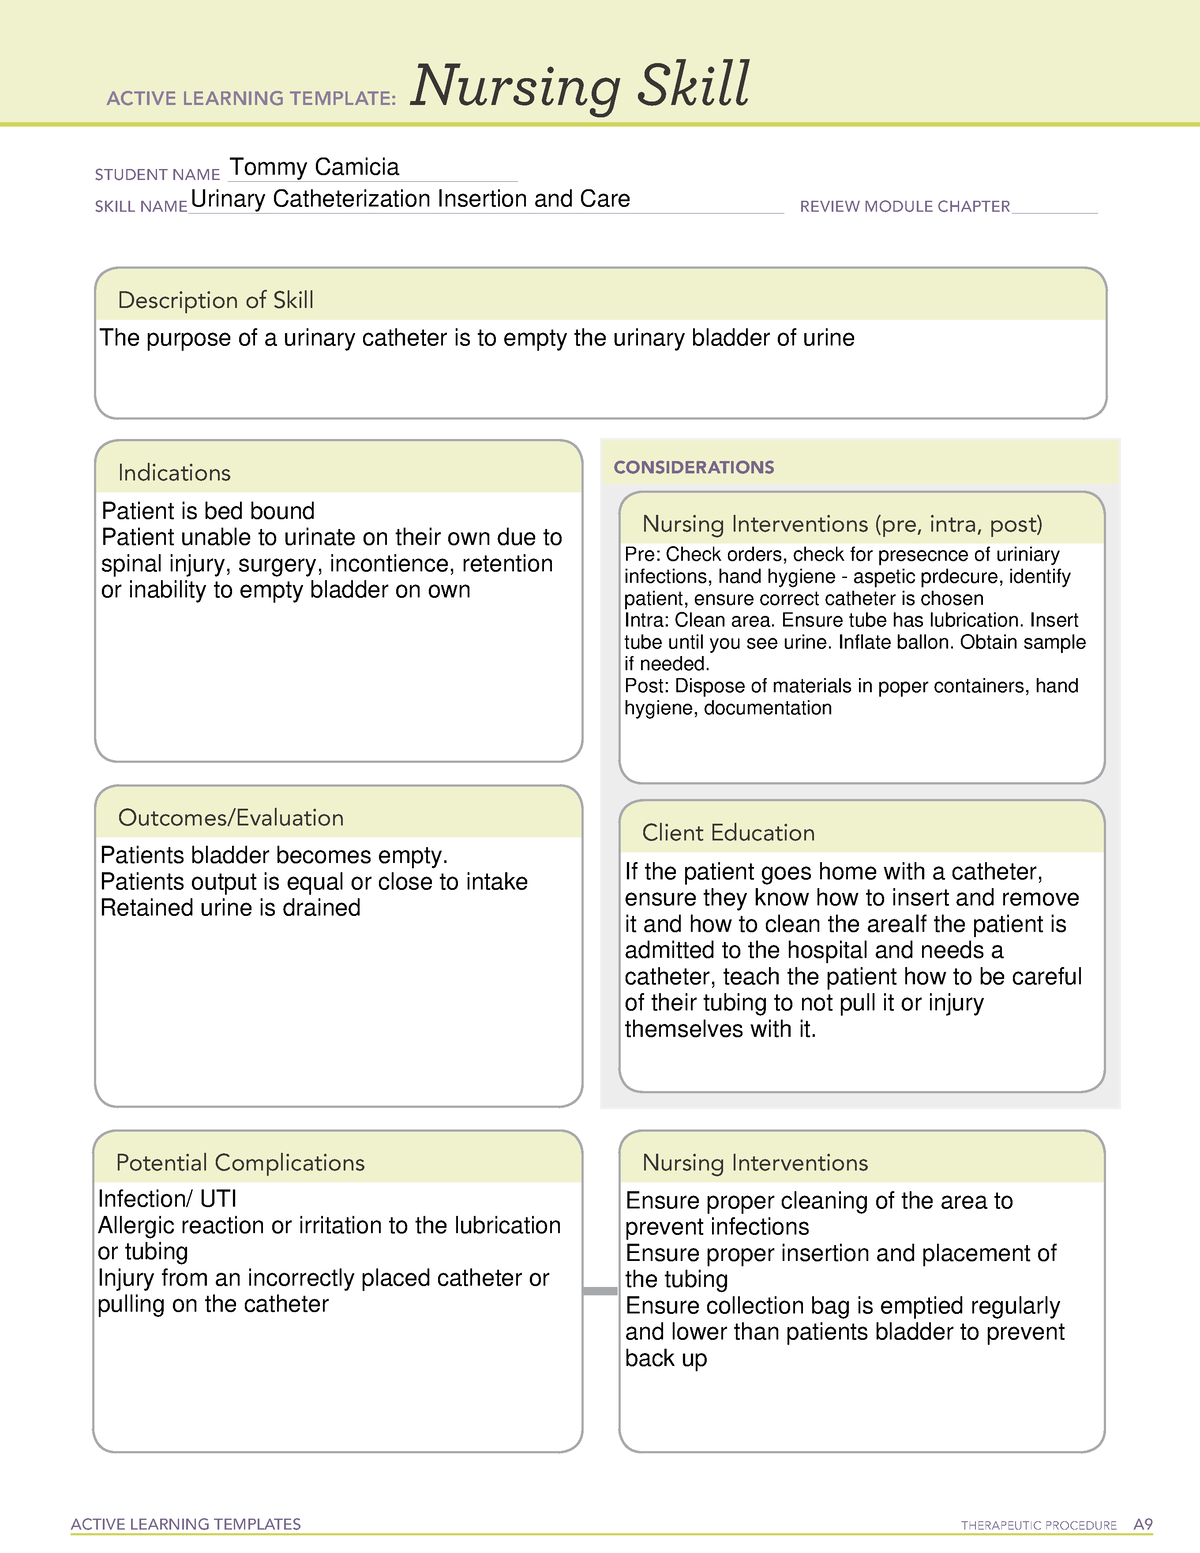 ati-template-nursing-skills-urinary-catherization-active-learning